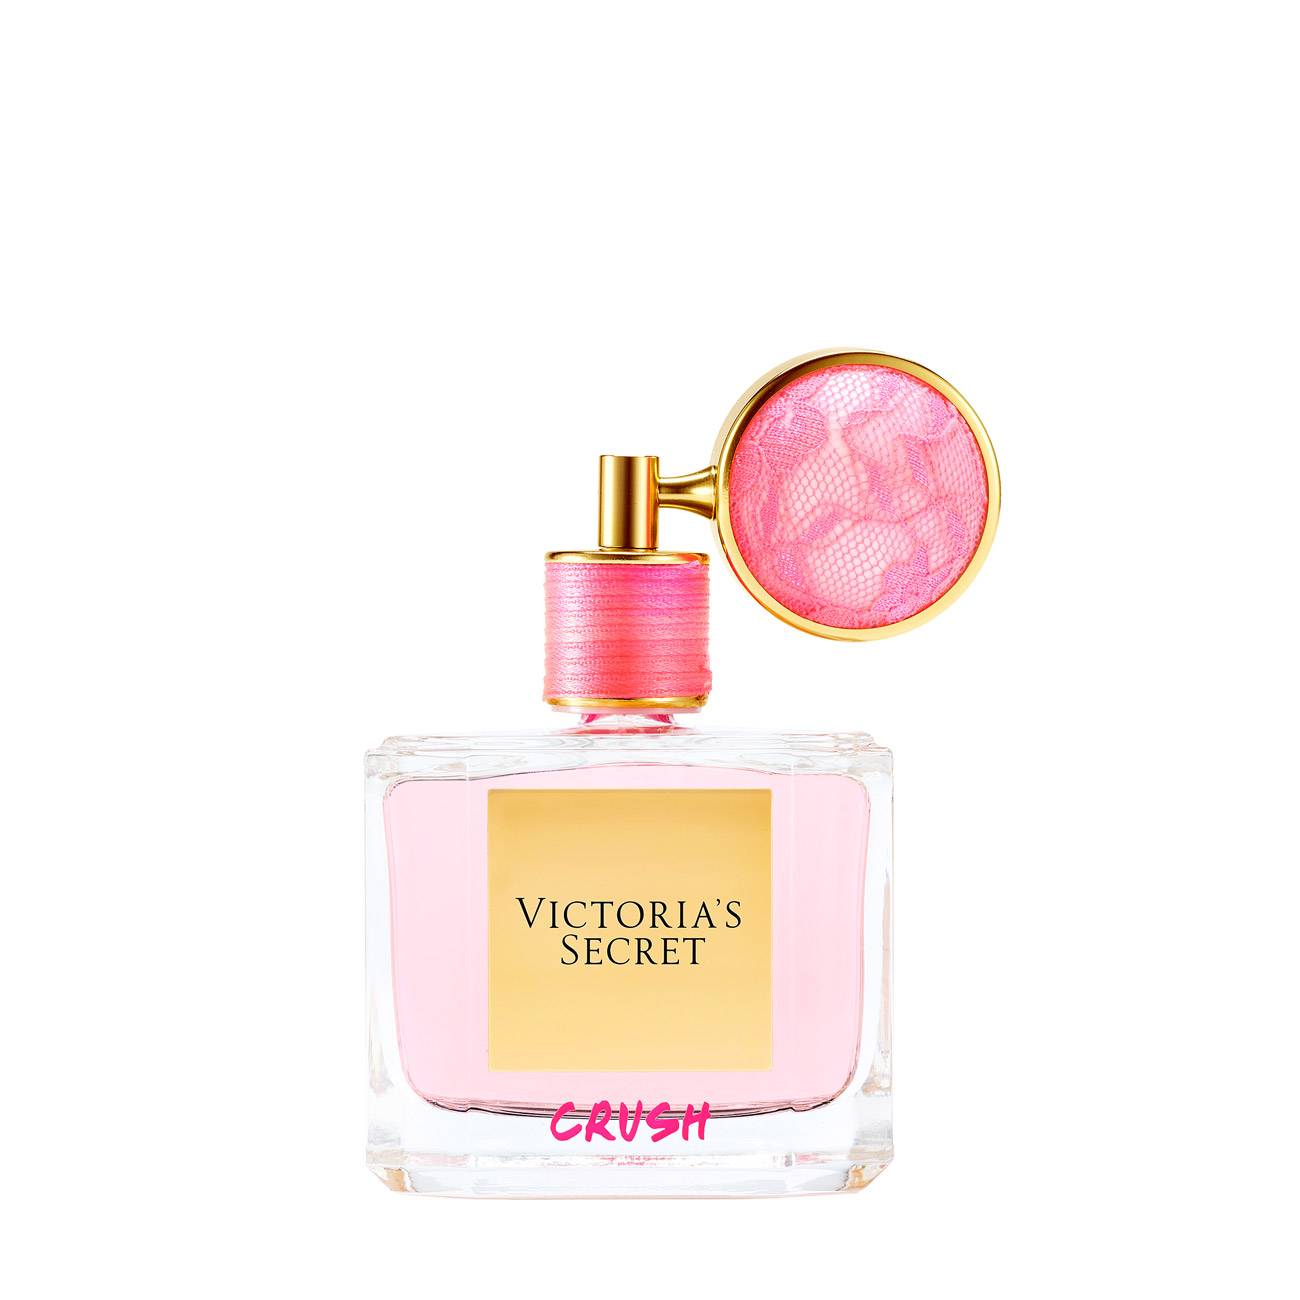 Apa de Parfum Victoria’s Secret CRUSH 50ml cu comanda online